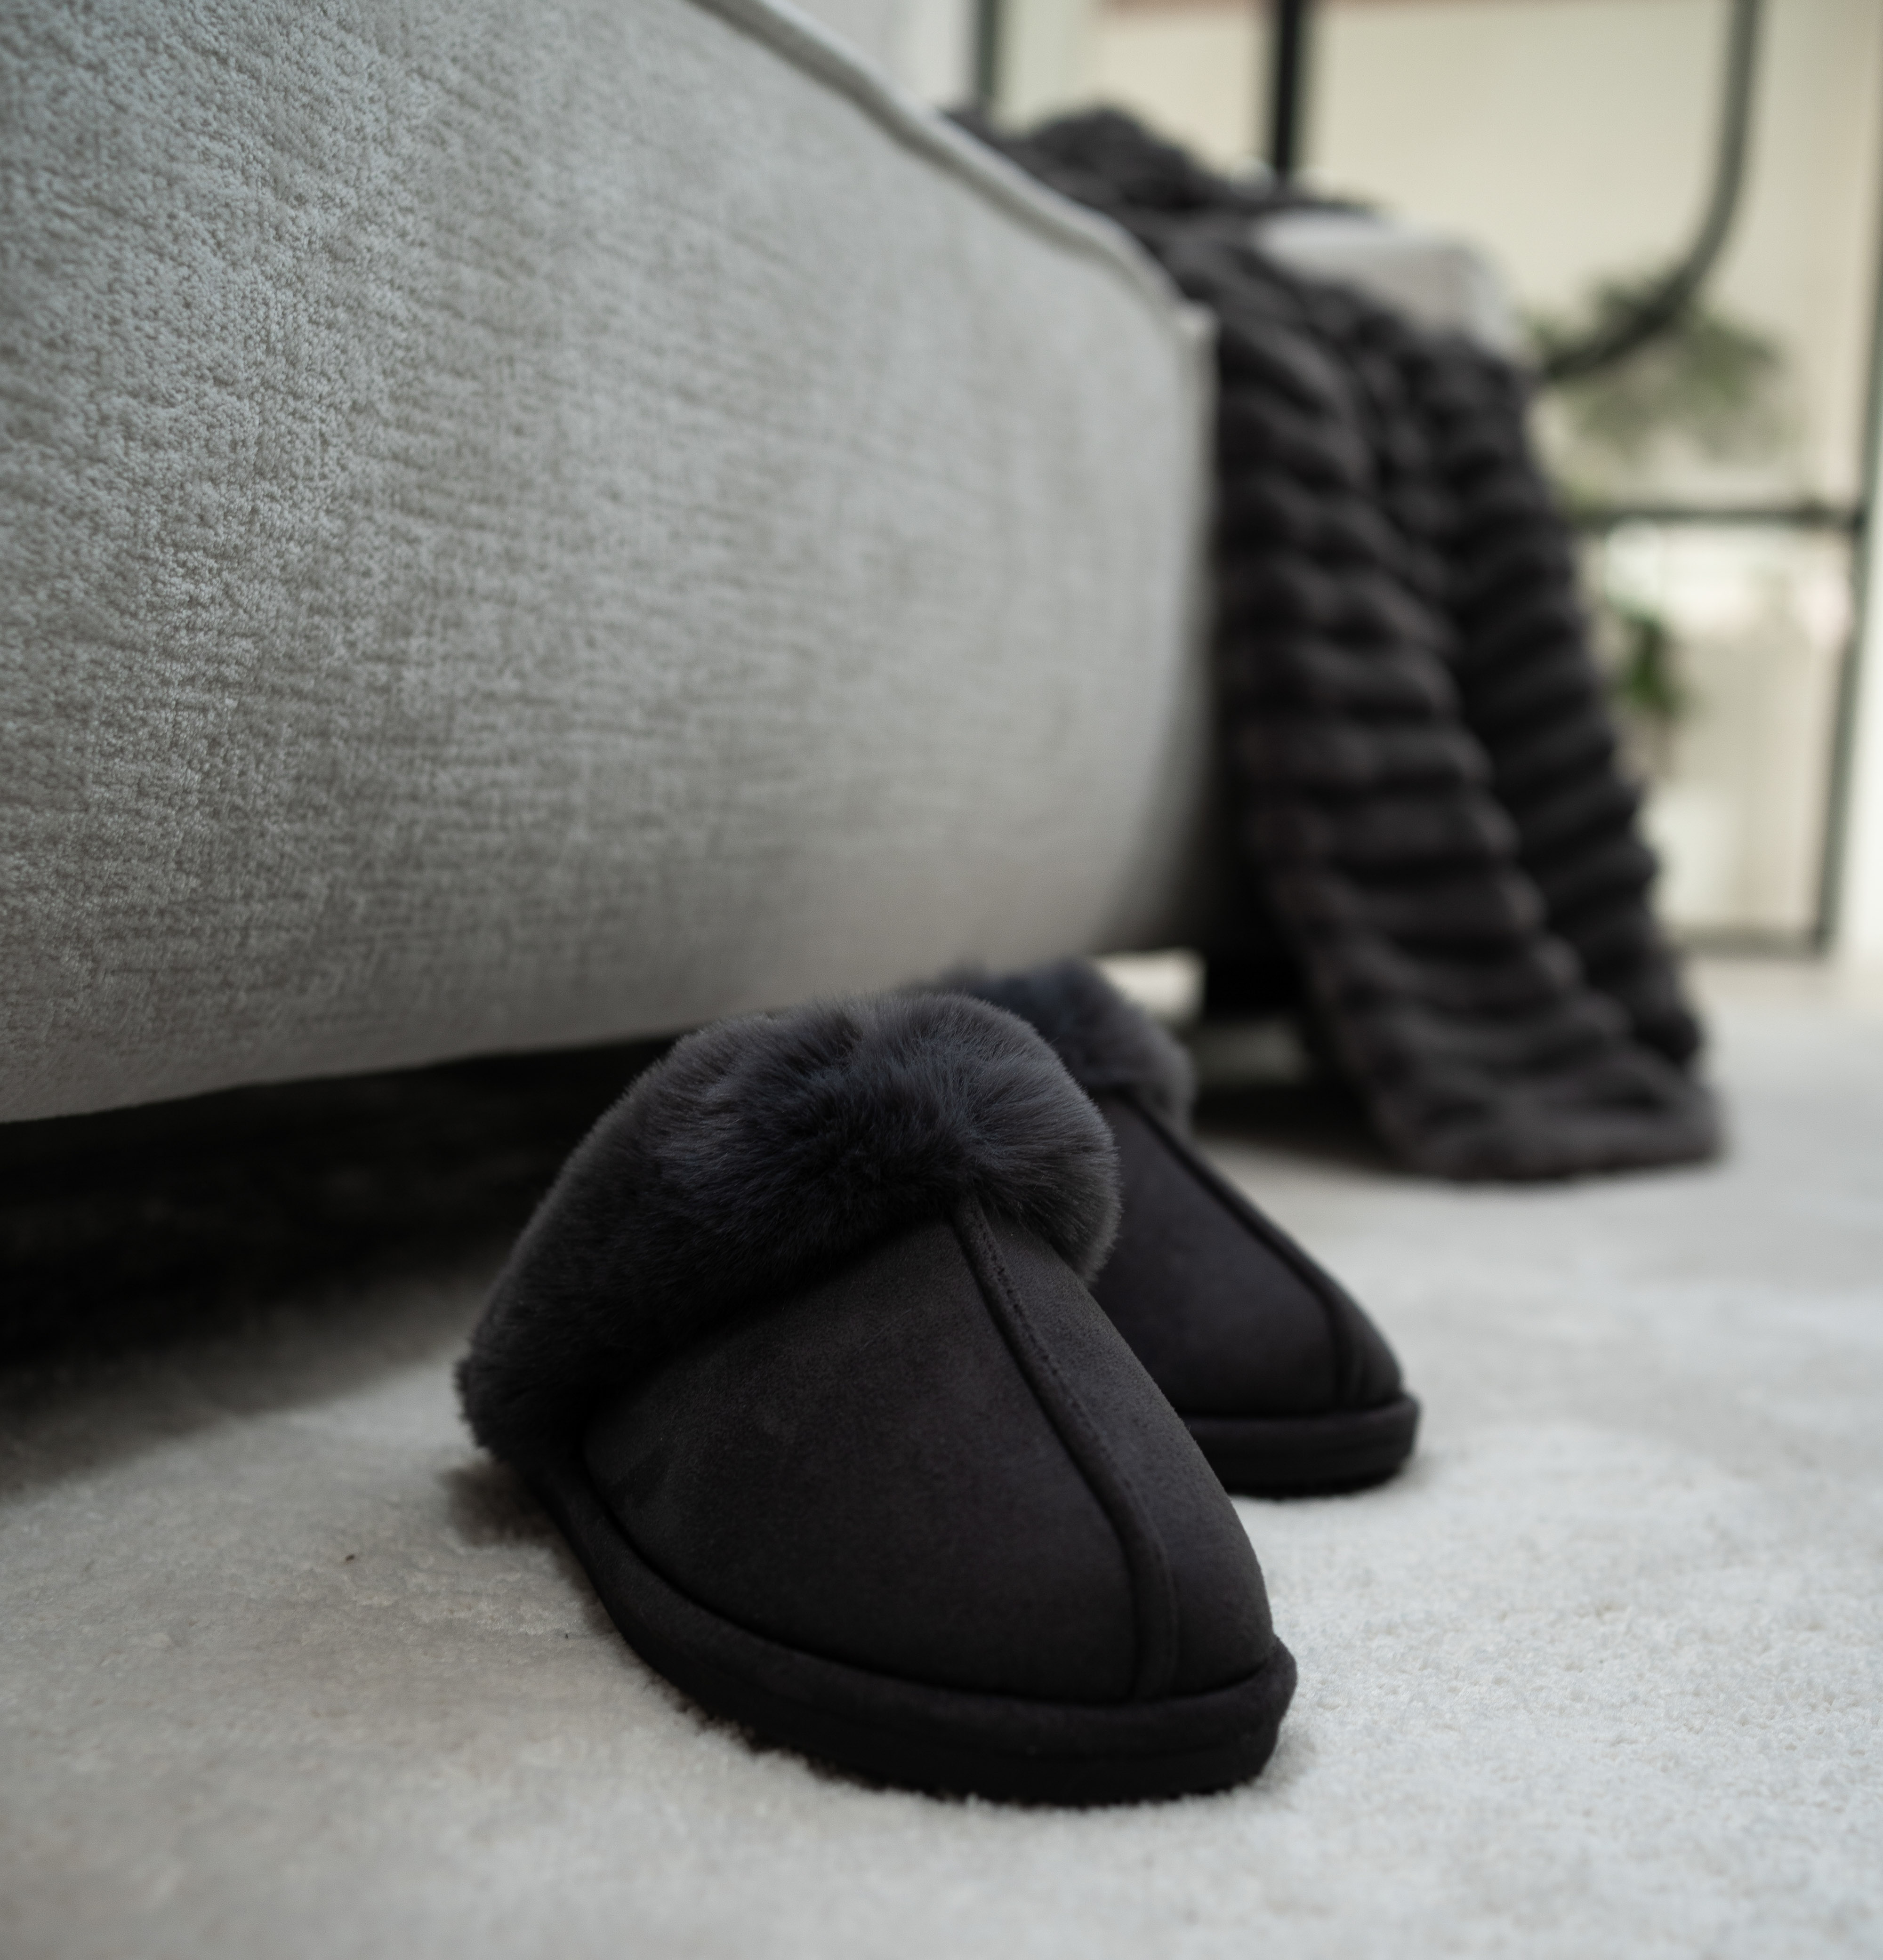 Suede slippers SNUGGS 36/37, black